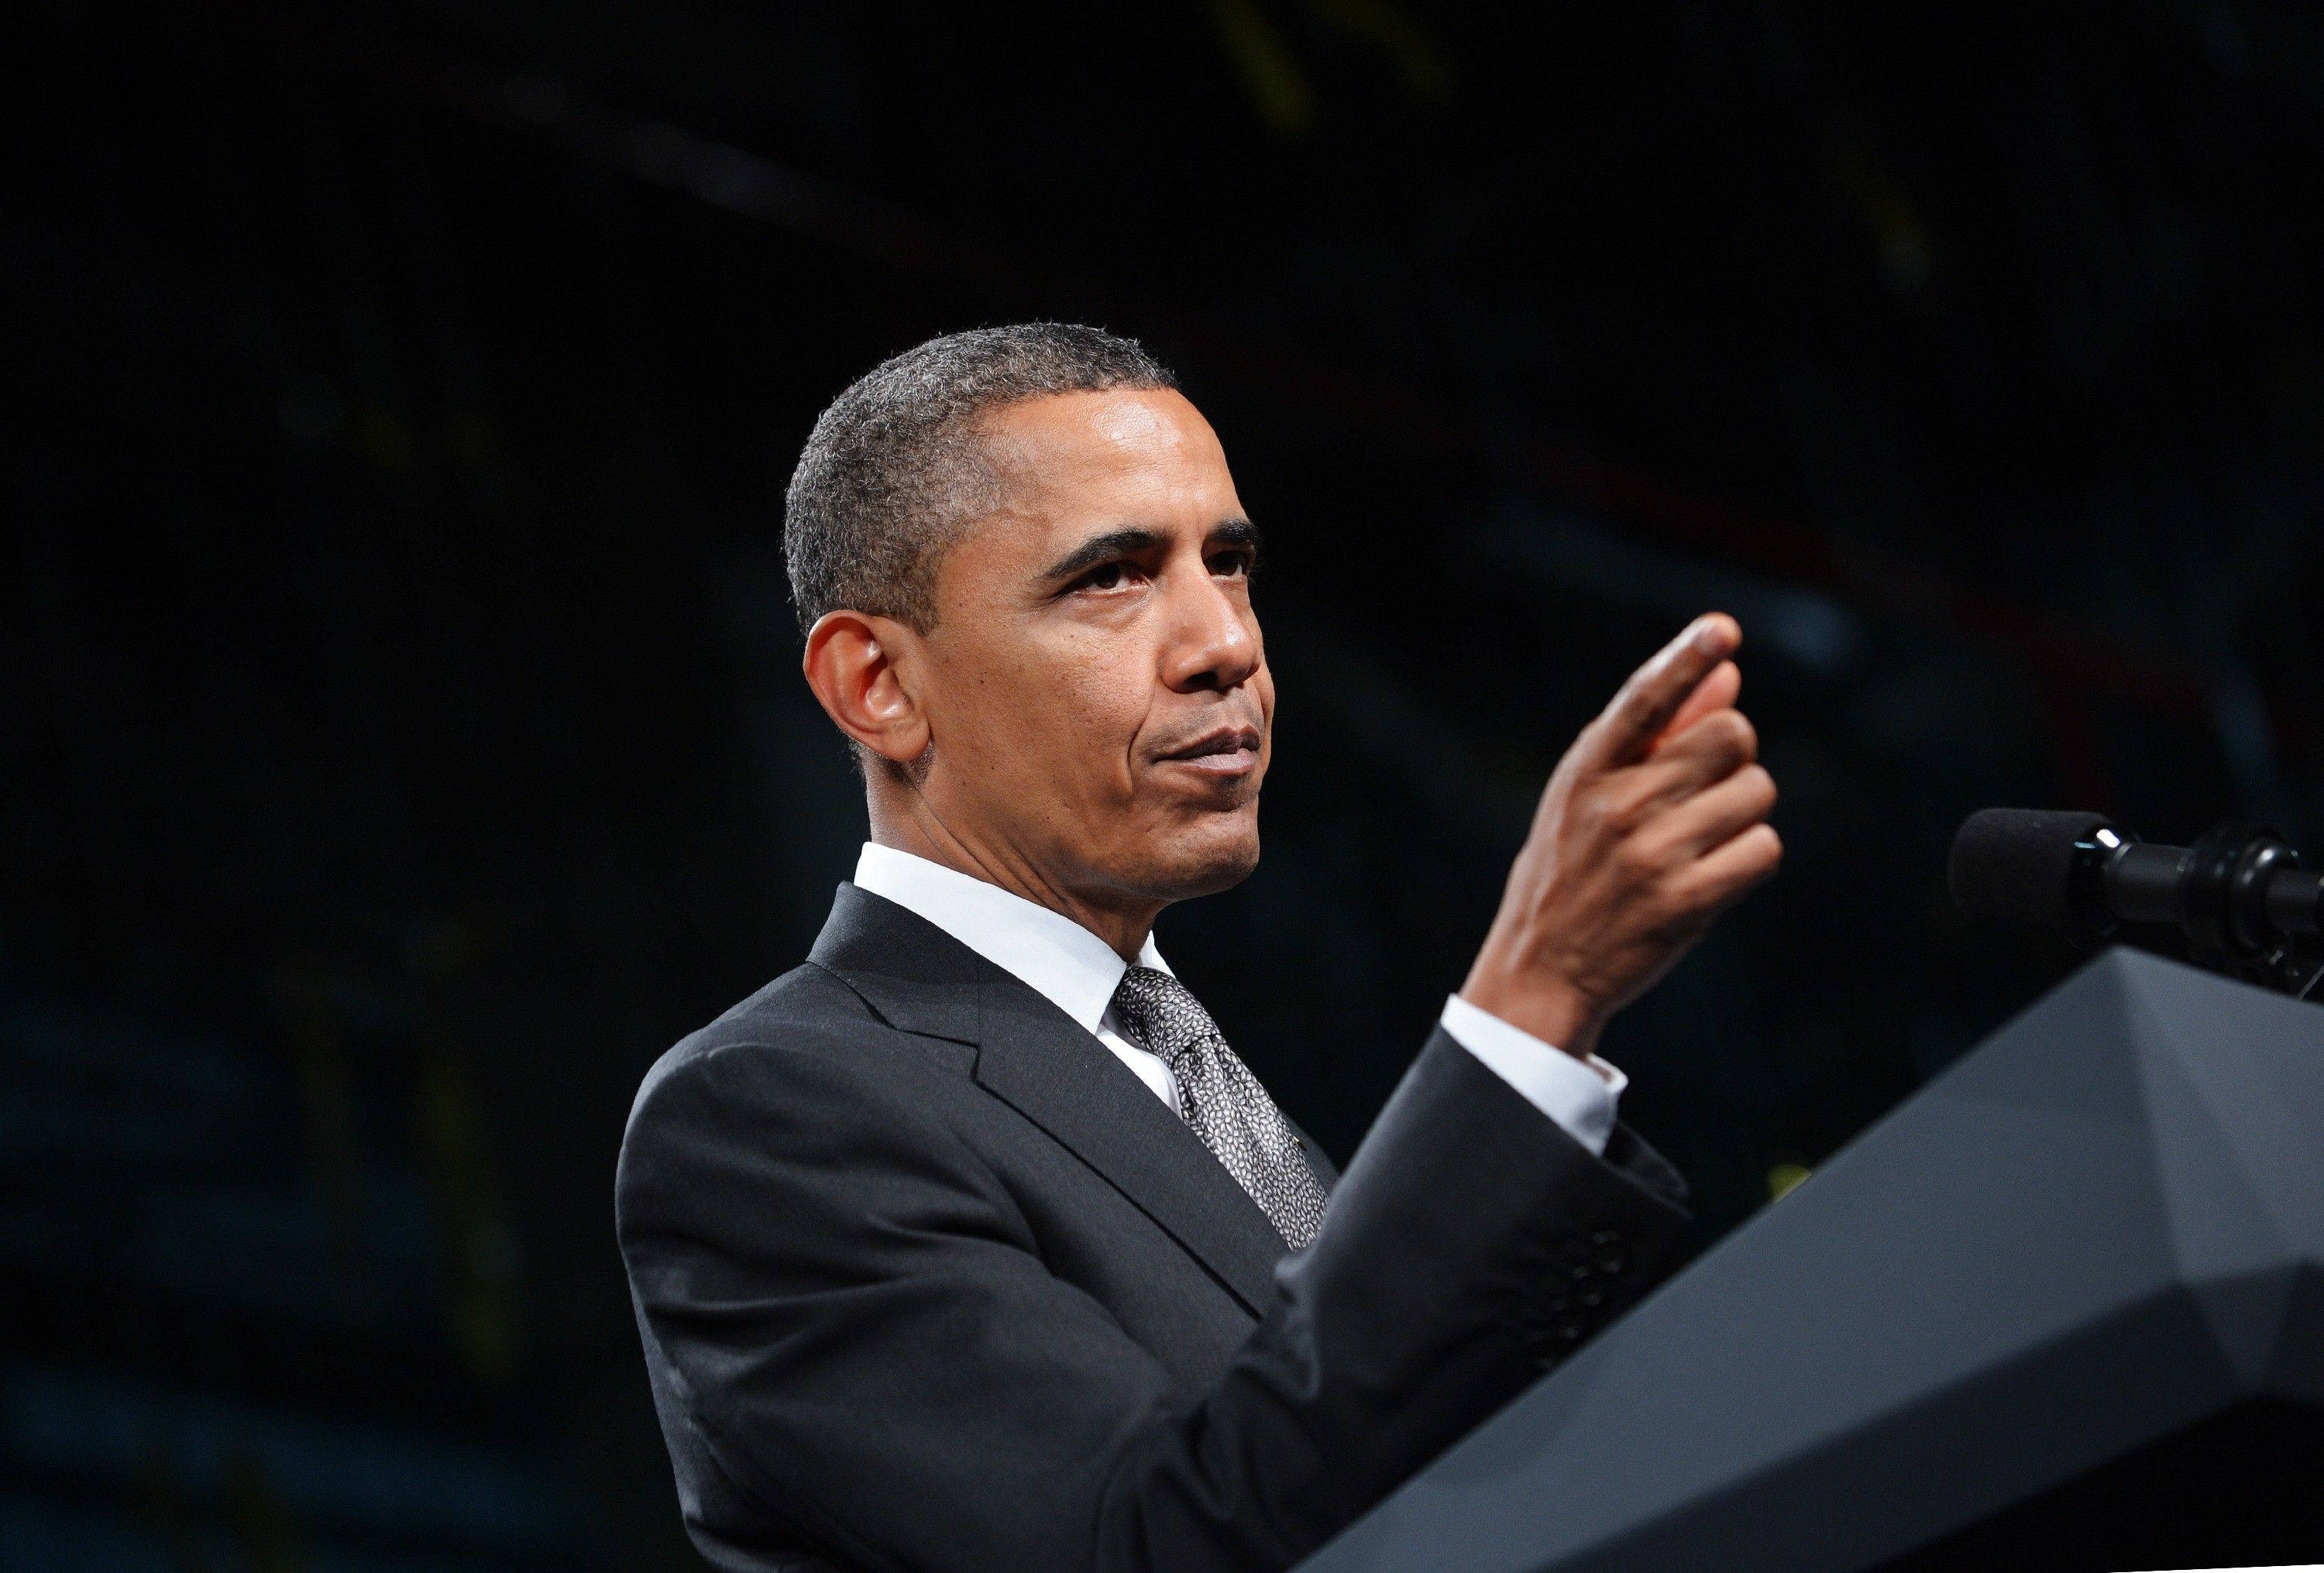 Download free Barack Obama Pointing His Hand Wallpaper - MrWallpaper.com